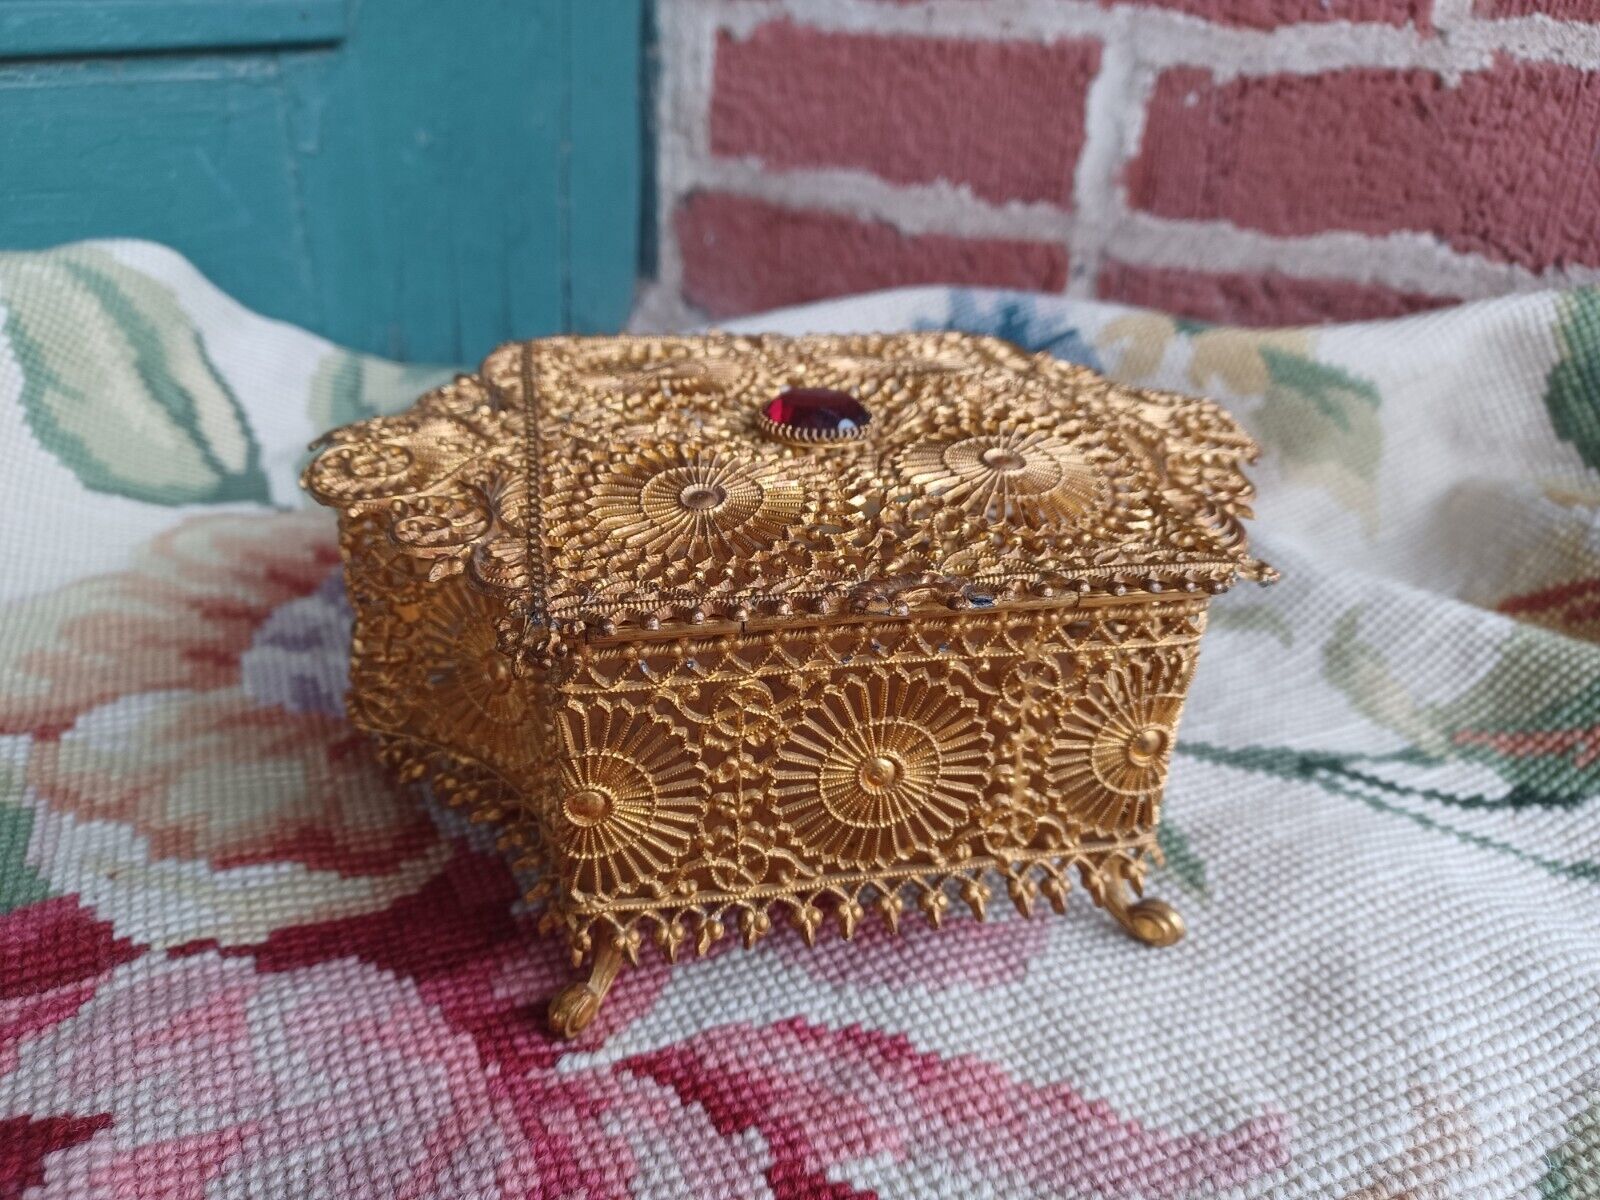 ANTIQUE GOLD GILT FILIGREE ORMOLU JEWELED TRINKET JEWELRY DRESSER BOX CASKET